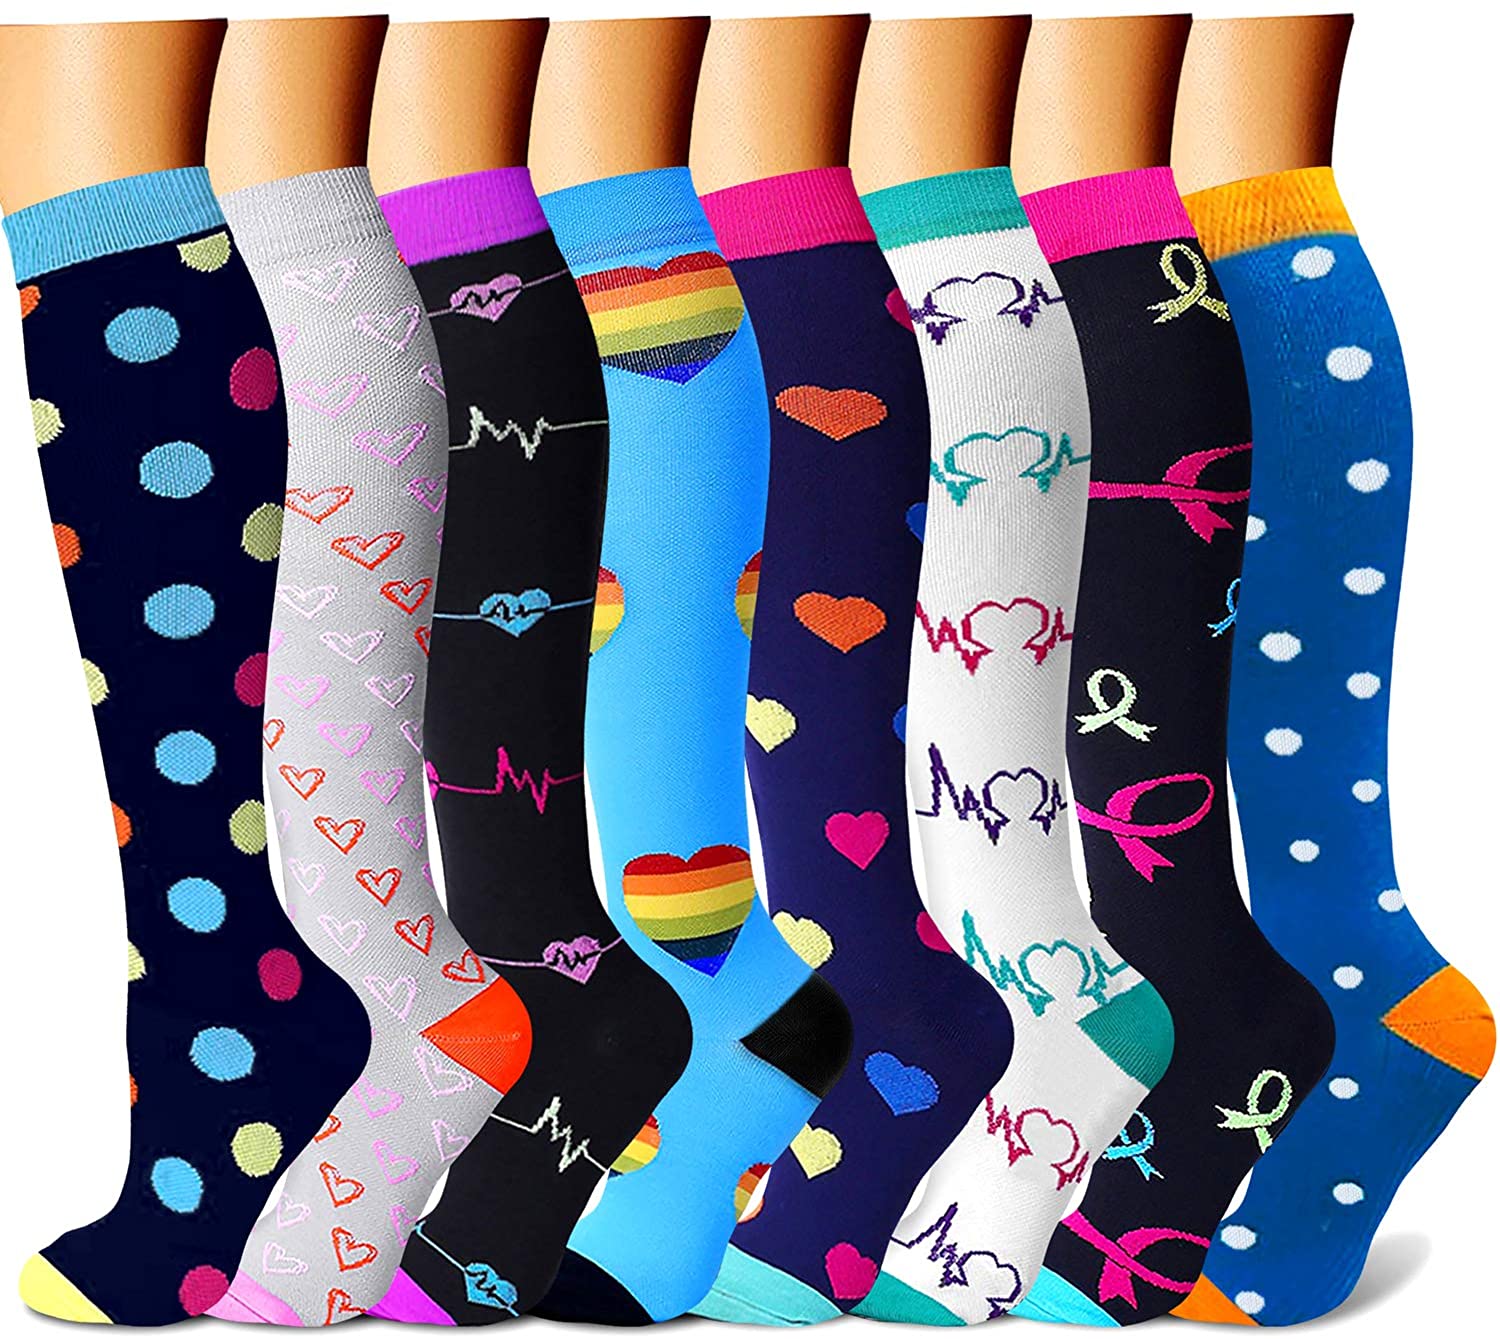 Charmking 15 20 Mmhg Compression Socks For Women 8 Pairs Compression Socks For Women 